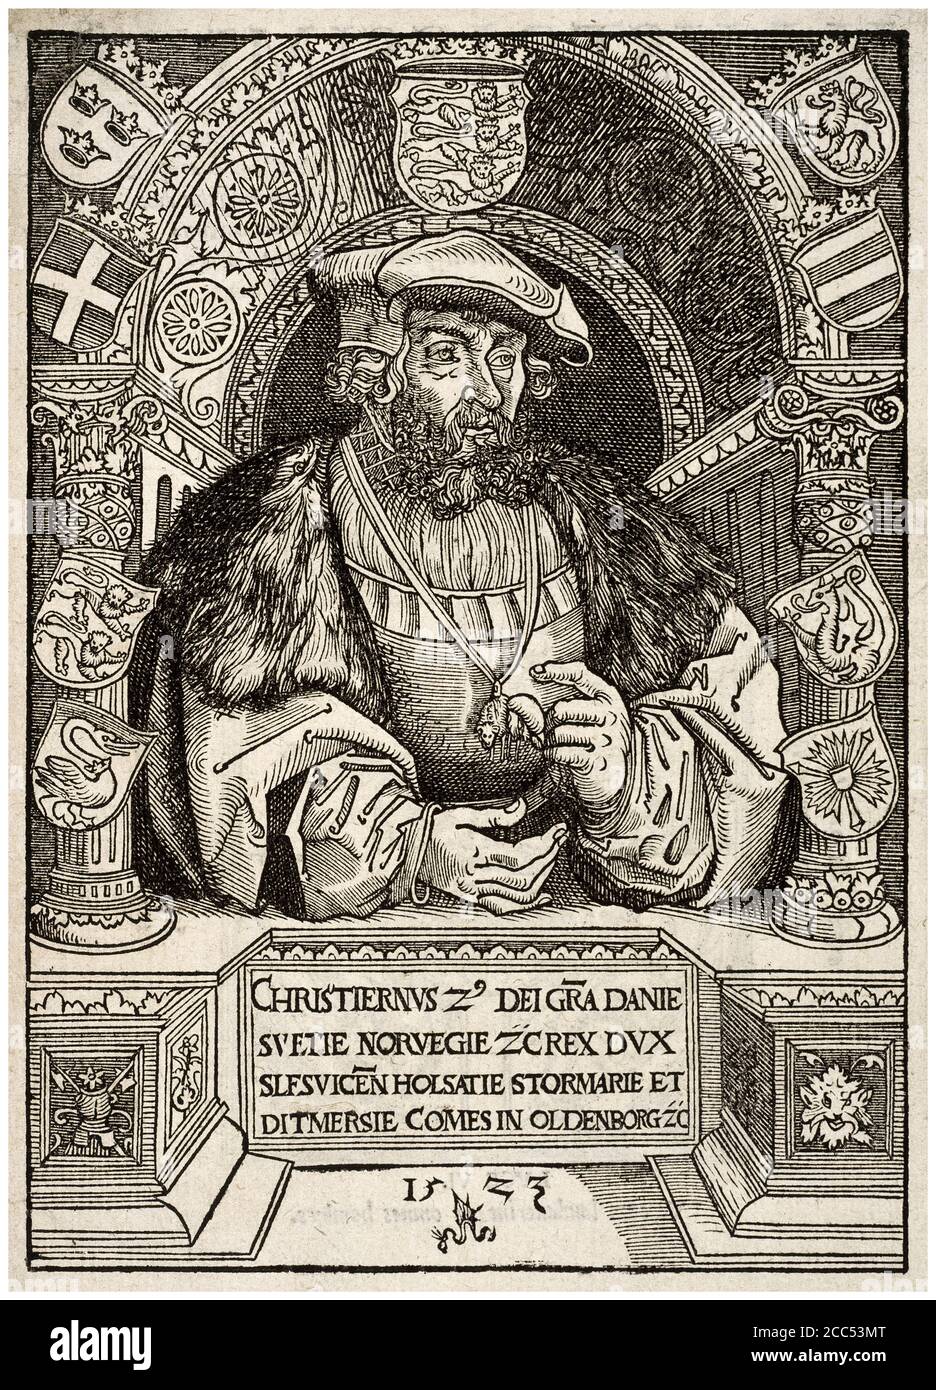 King Christian II of Denmark (1481-1559), woodcut print by Lucas Cranach the Elder, 1523 Stock Photo